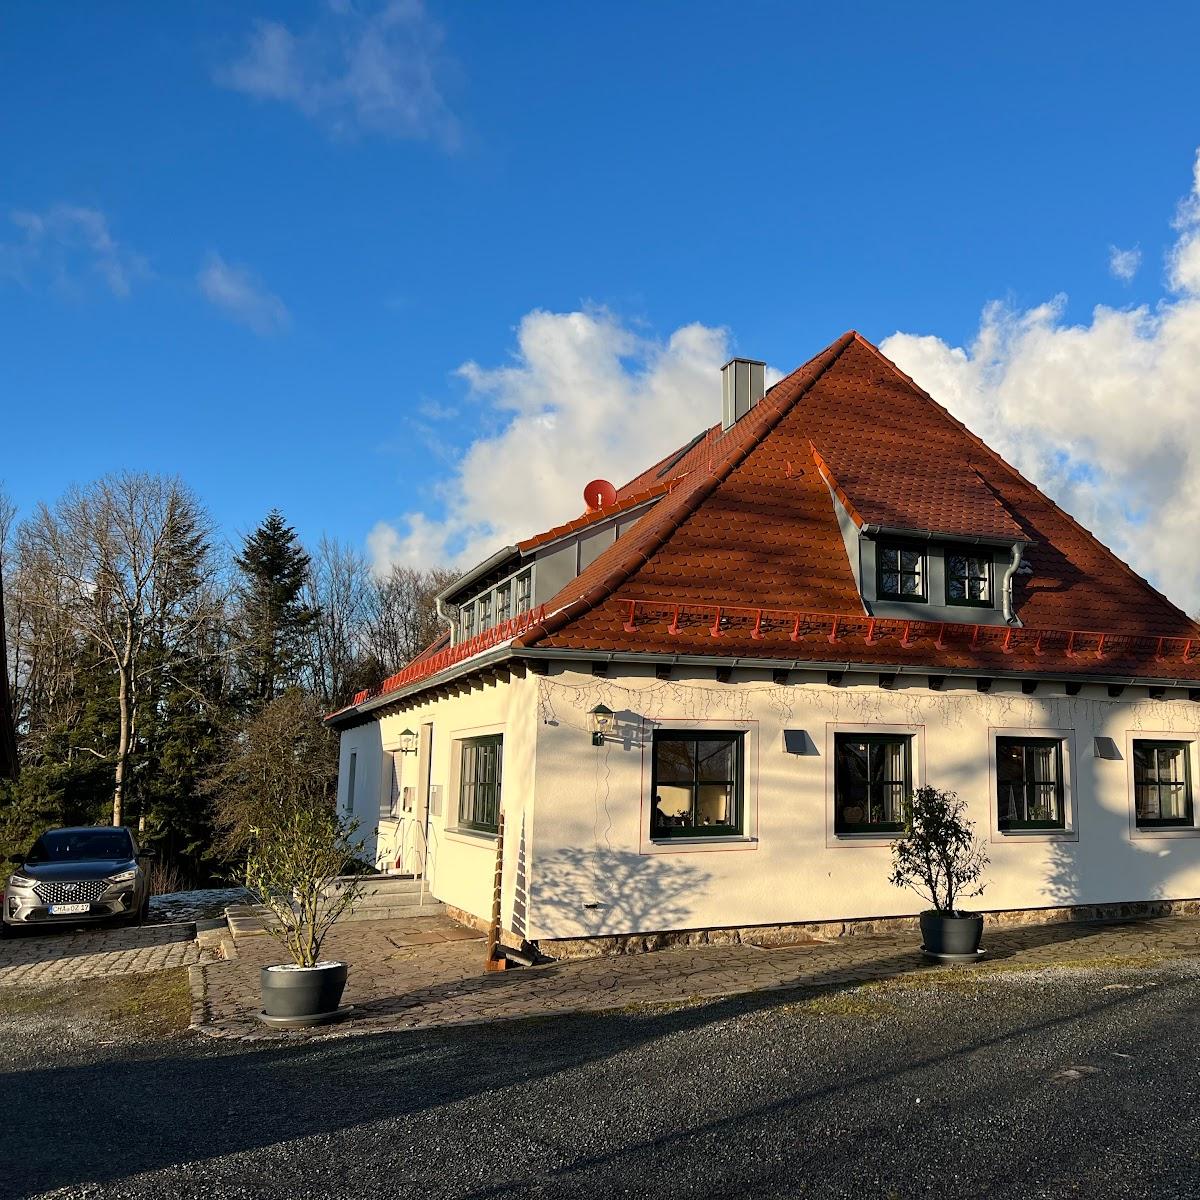 Restaurant "Wirtshaus Lamberg" in Cham